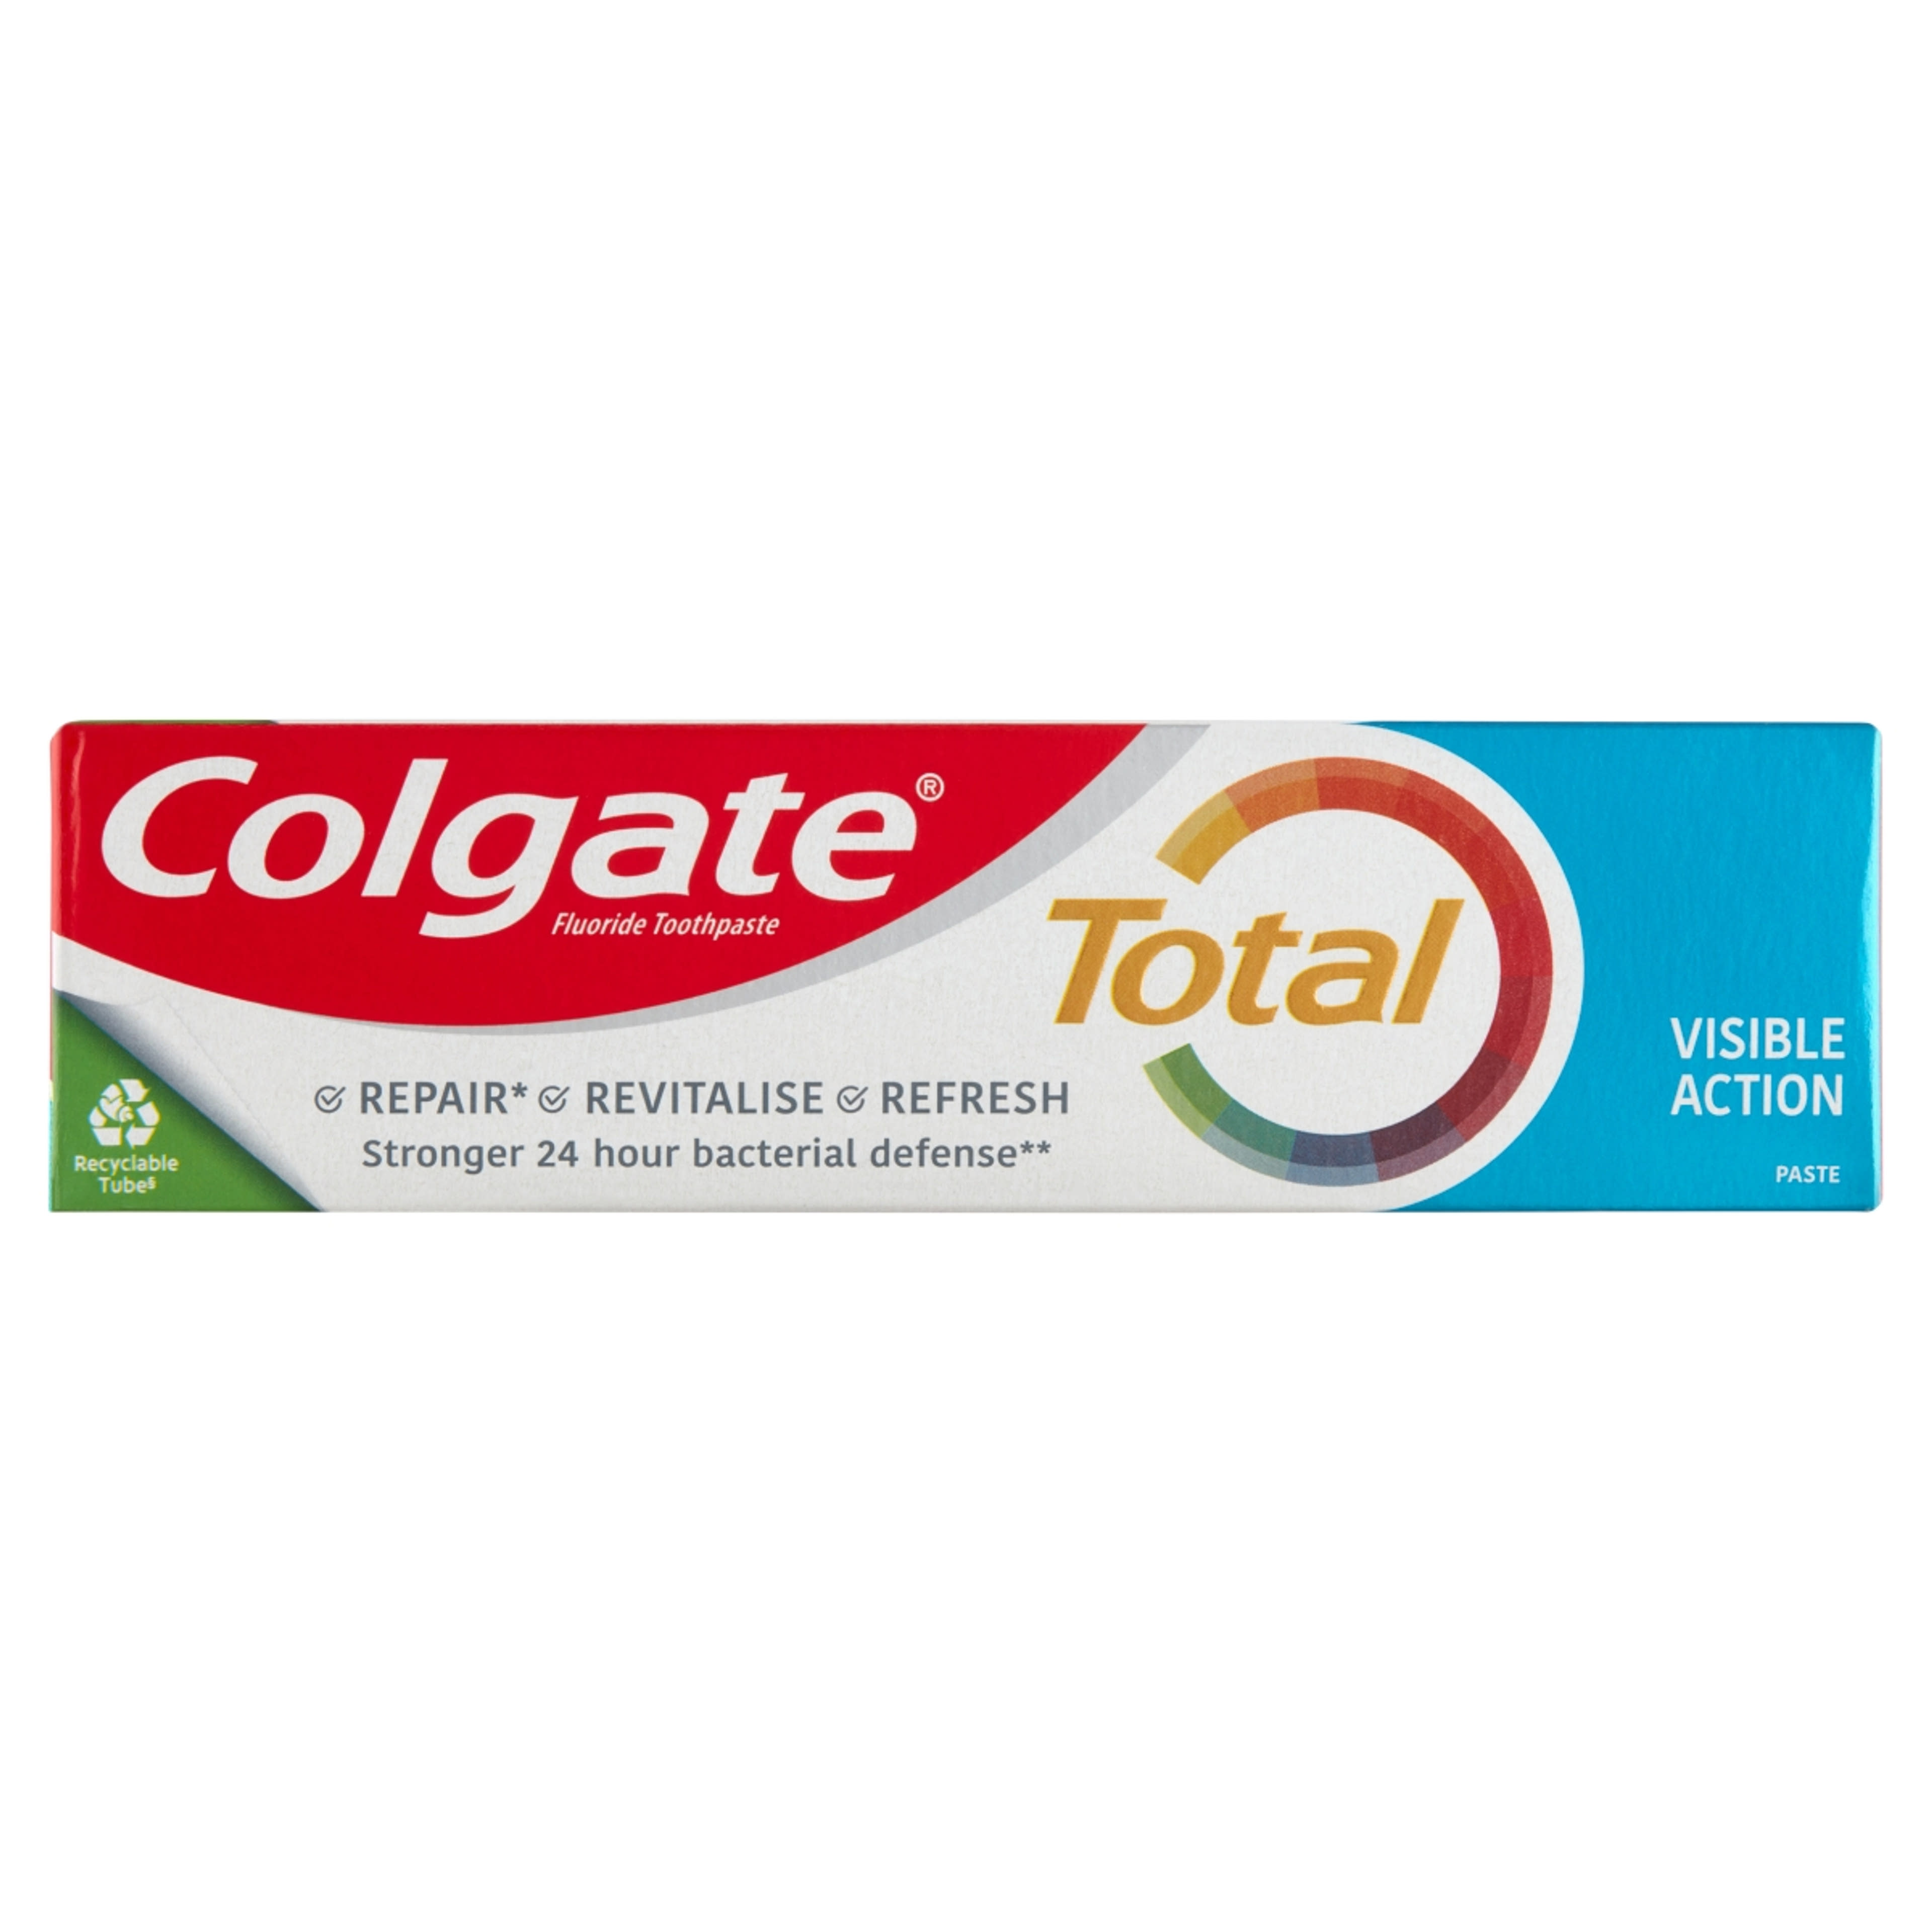 Colgate Total Visible Action fogkrém - 75 ml-1